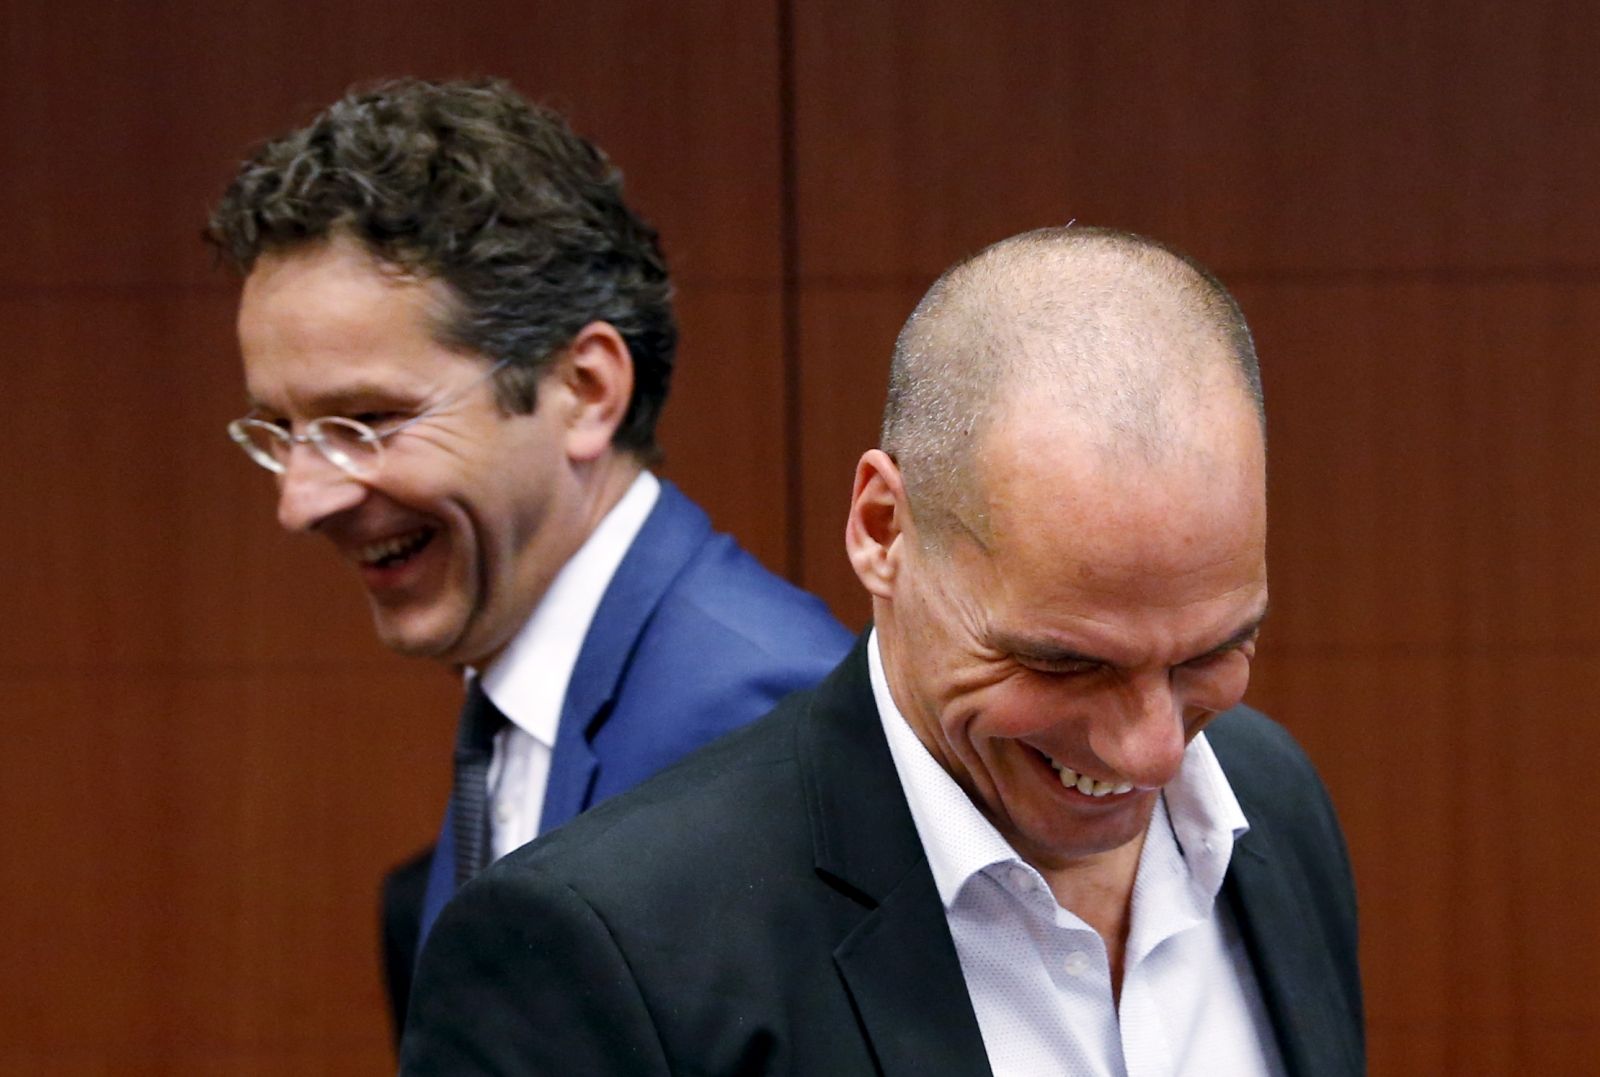 Varoufakis and Dijsselbloem